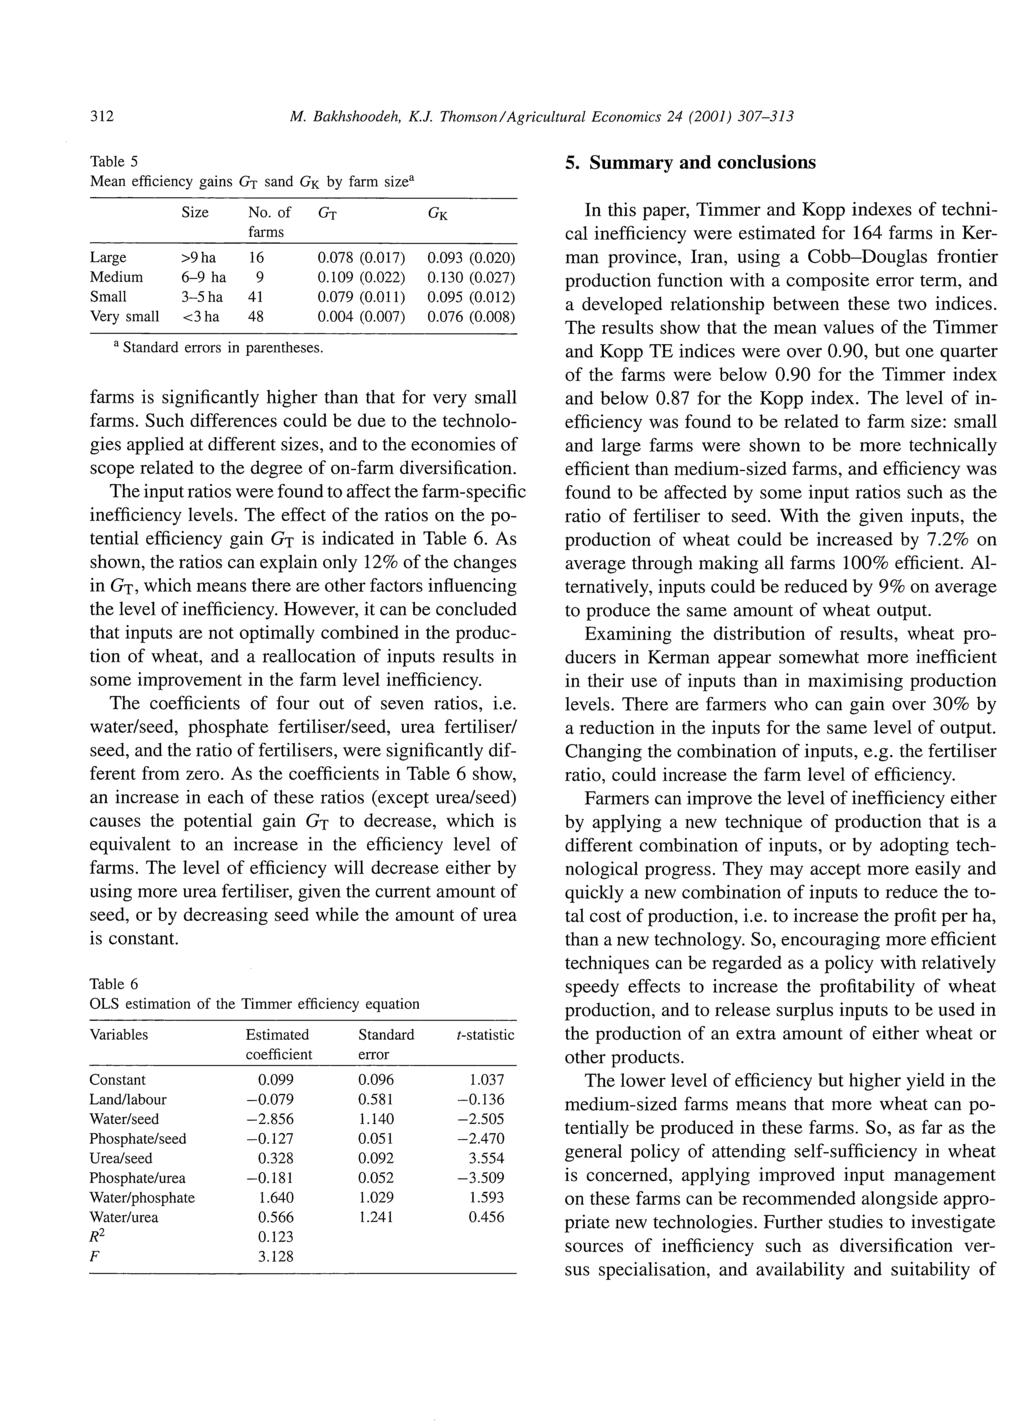 312 M. Bakhshoodeh, K.J. Thomson/ Agricultural Economics 24 (2001) 307-313 Table 5 Mean efficiency gains Gr sand GK by farm size Size No. of Gr GK farms Large >9ha 16 0.078 (0.017) 0.093 (0.